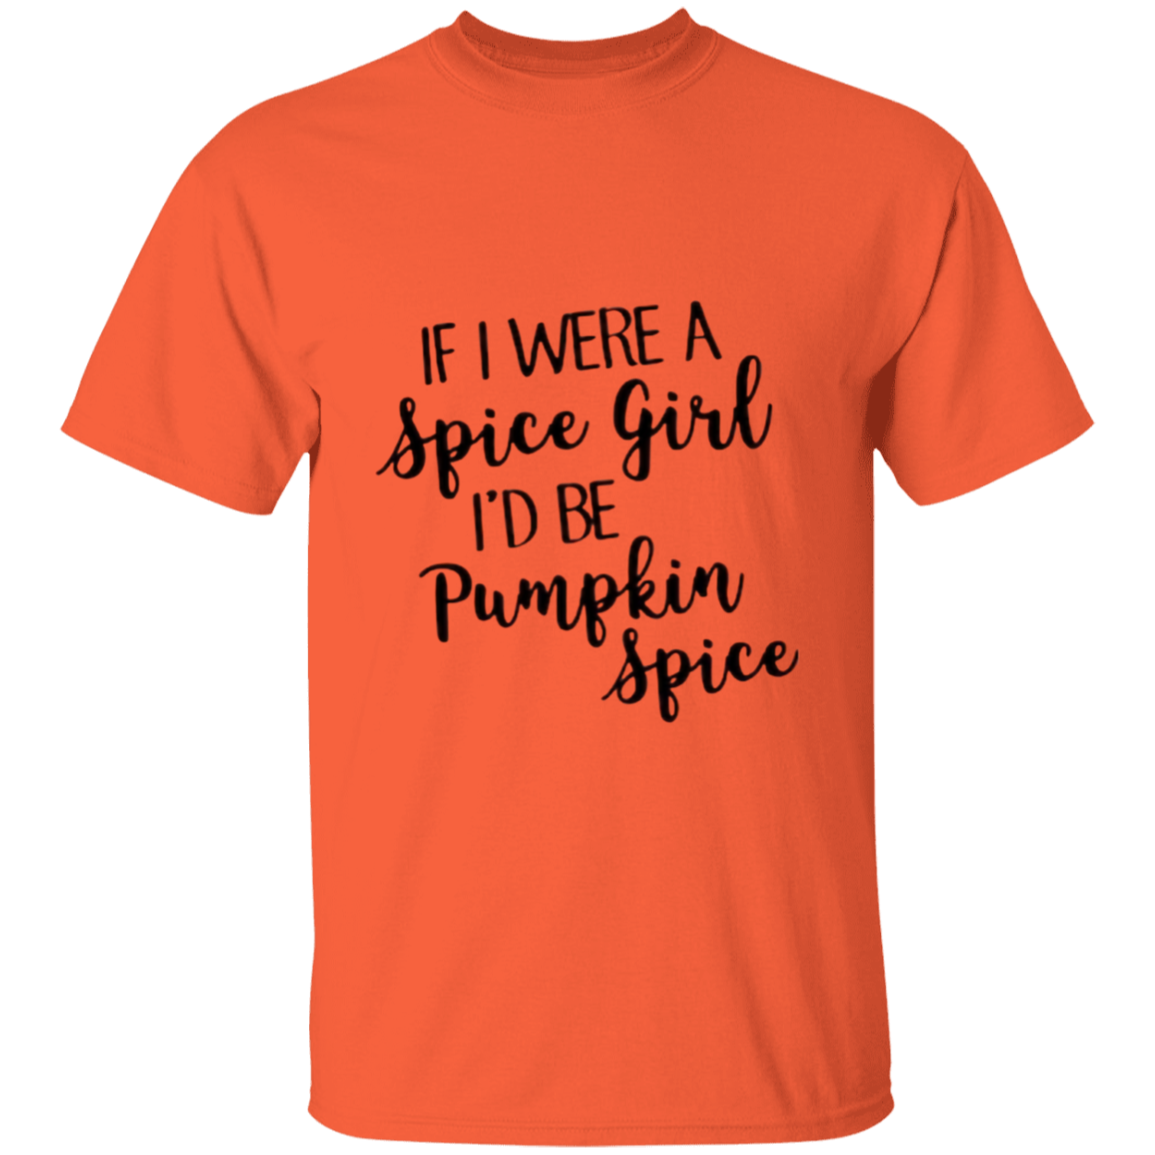 If I were a Spice girl I'd be Pumpkin Spice T-Shirt